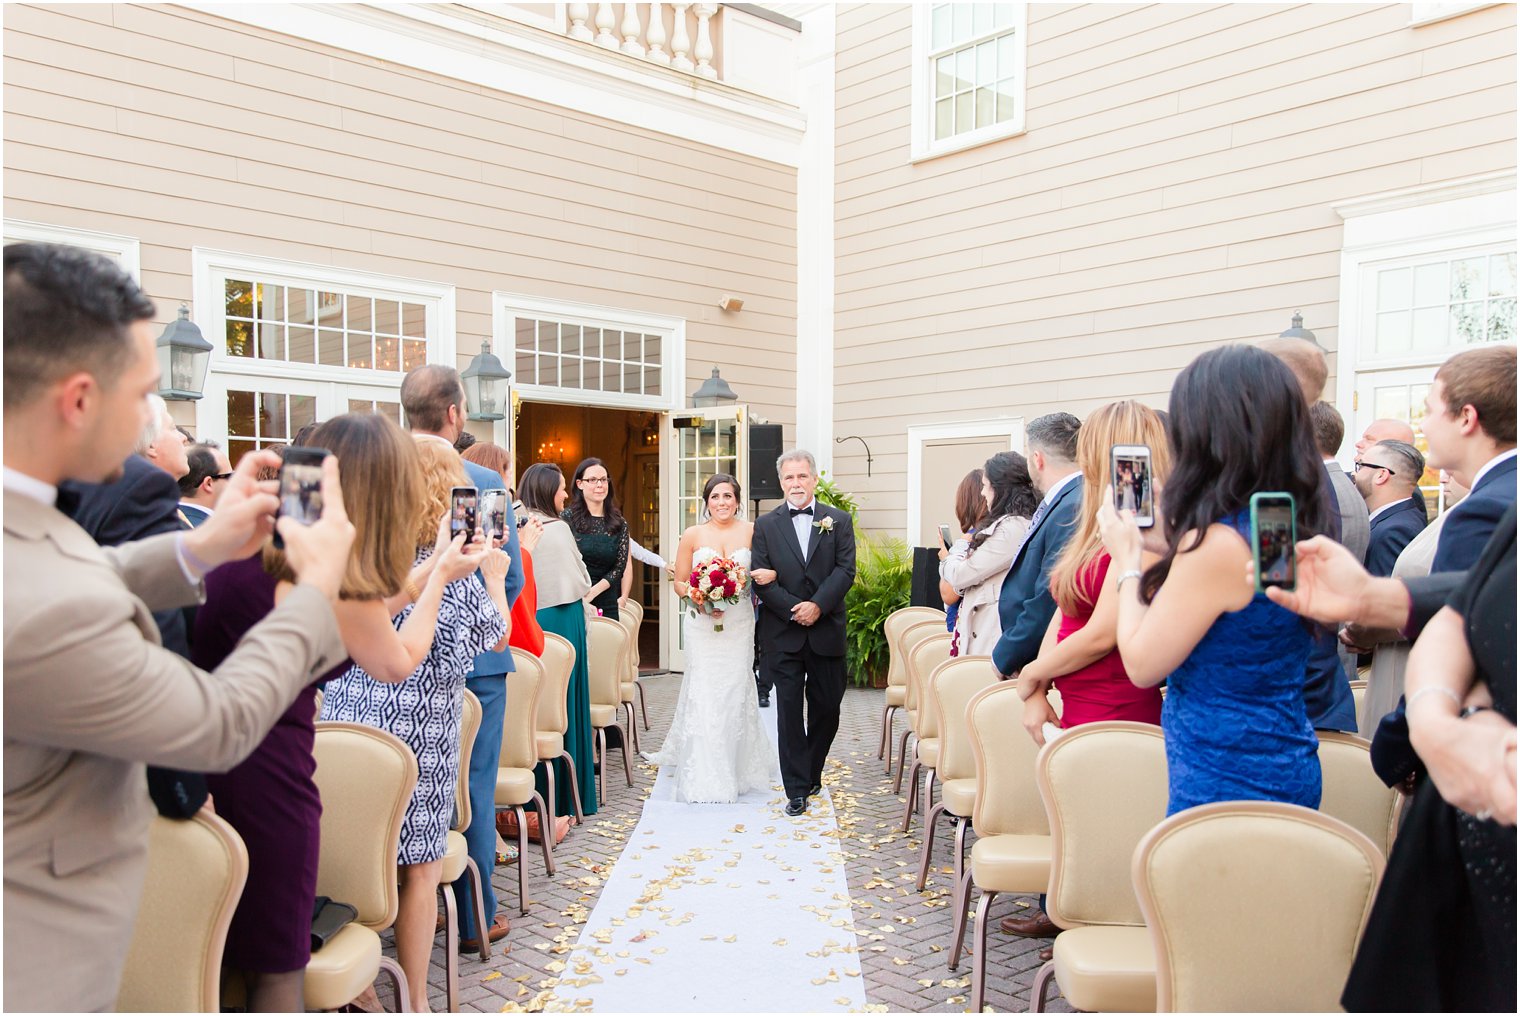 Outdoor wedding ceremony at Meadow Wood Manor | Photos by NJ Wedding Photographers Idalia Photography